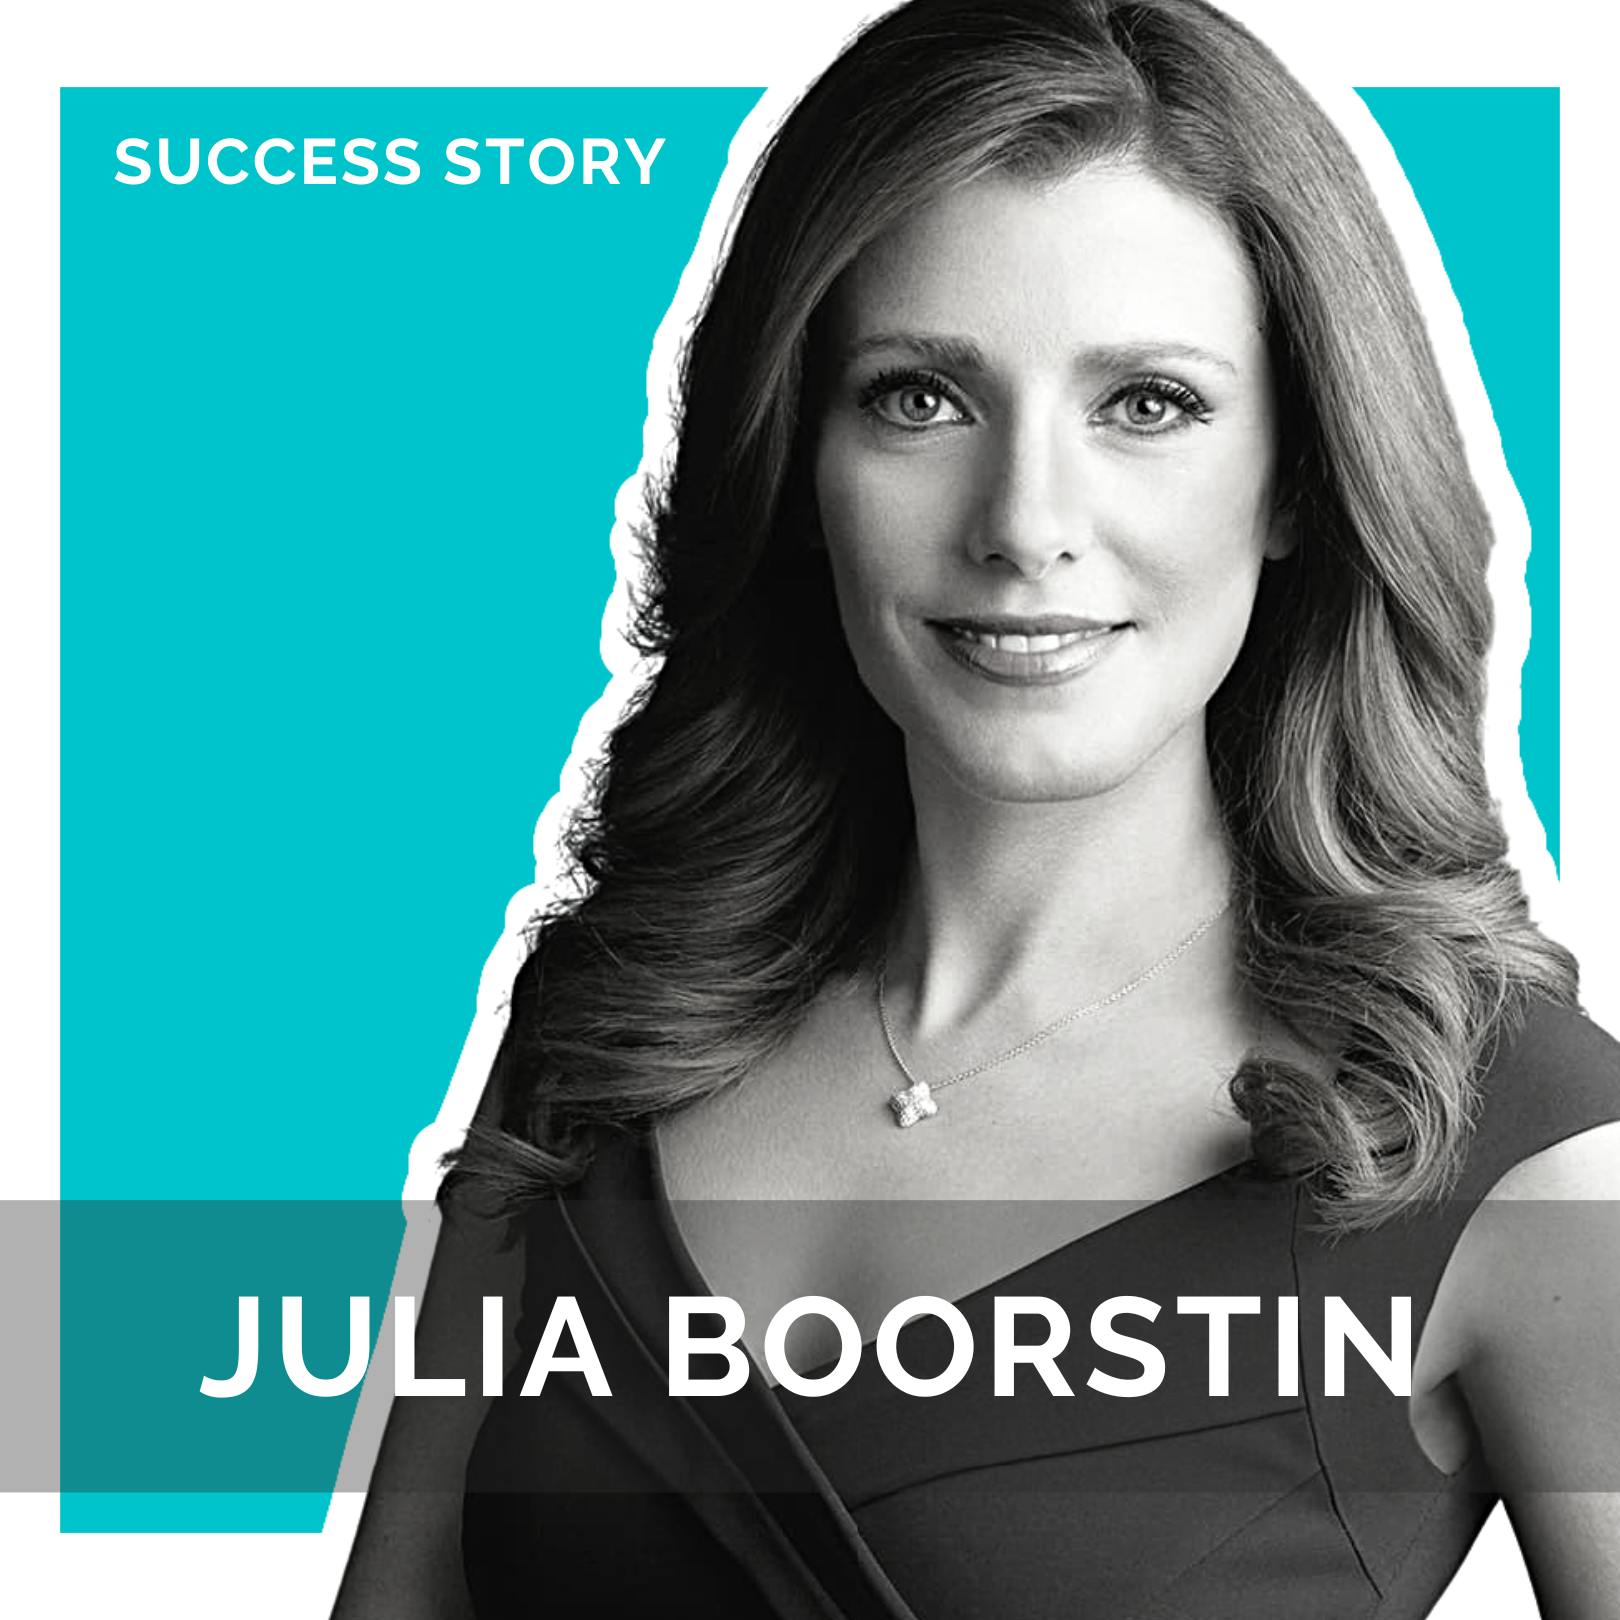 Julia Boorstin - CNBC’s Senior Media & Technology Reporter | When Women Lead